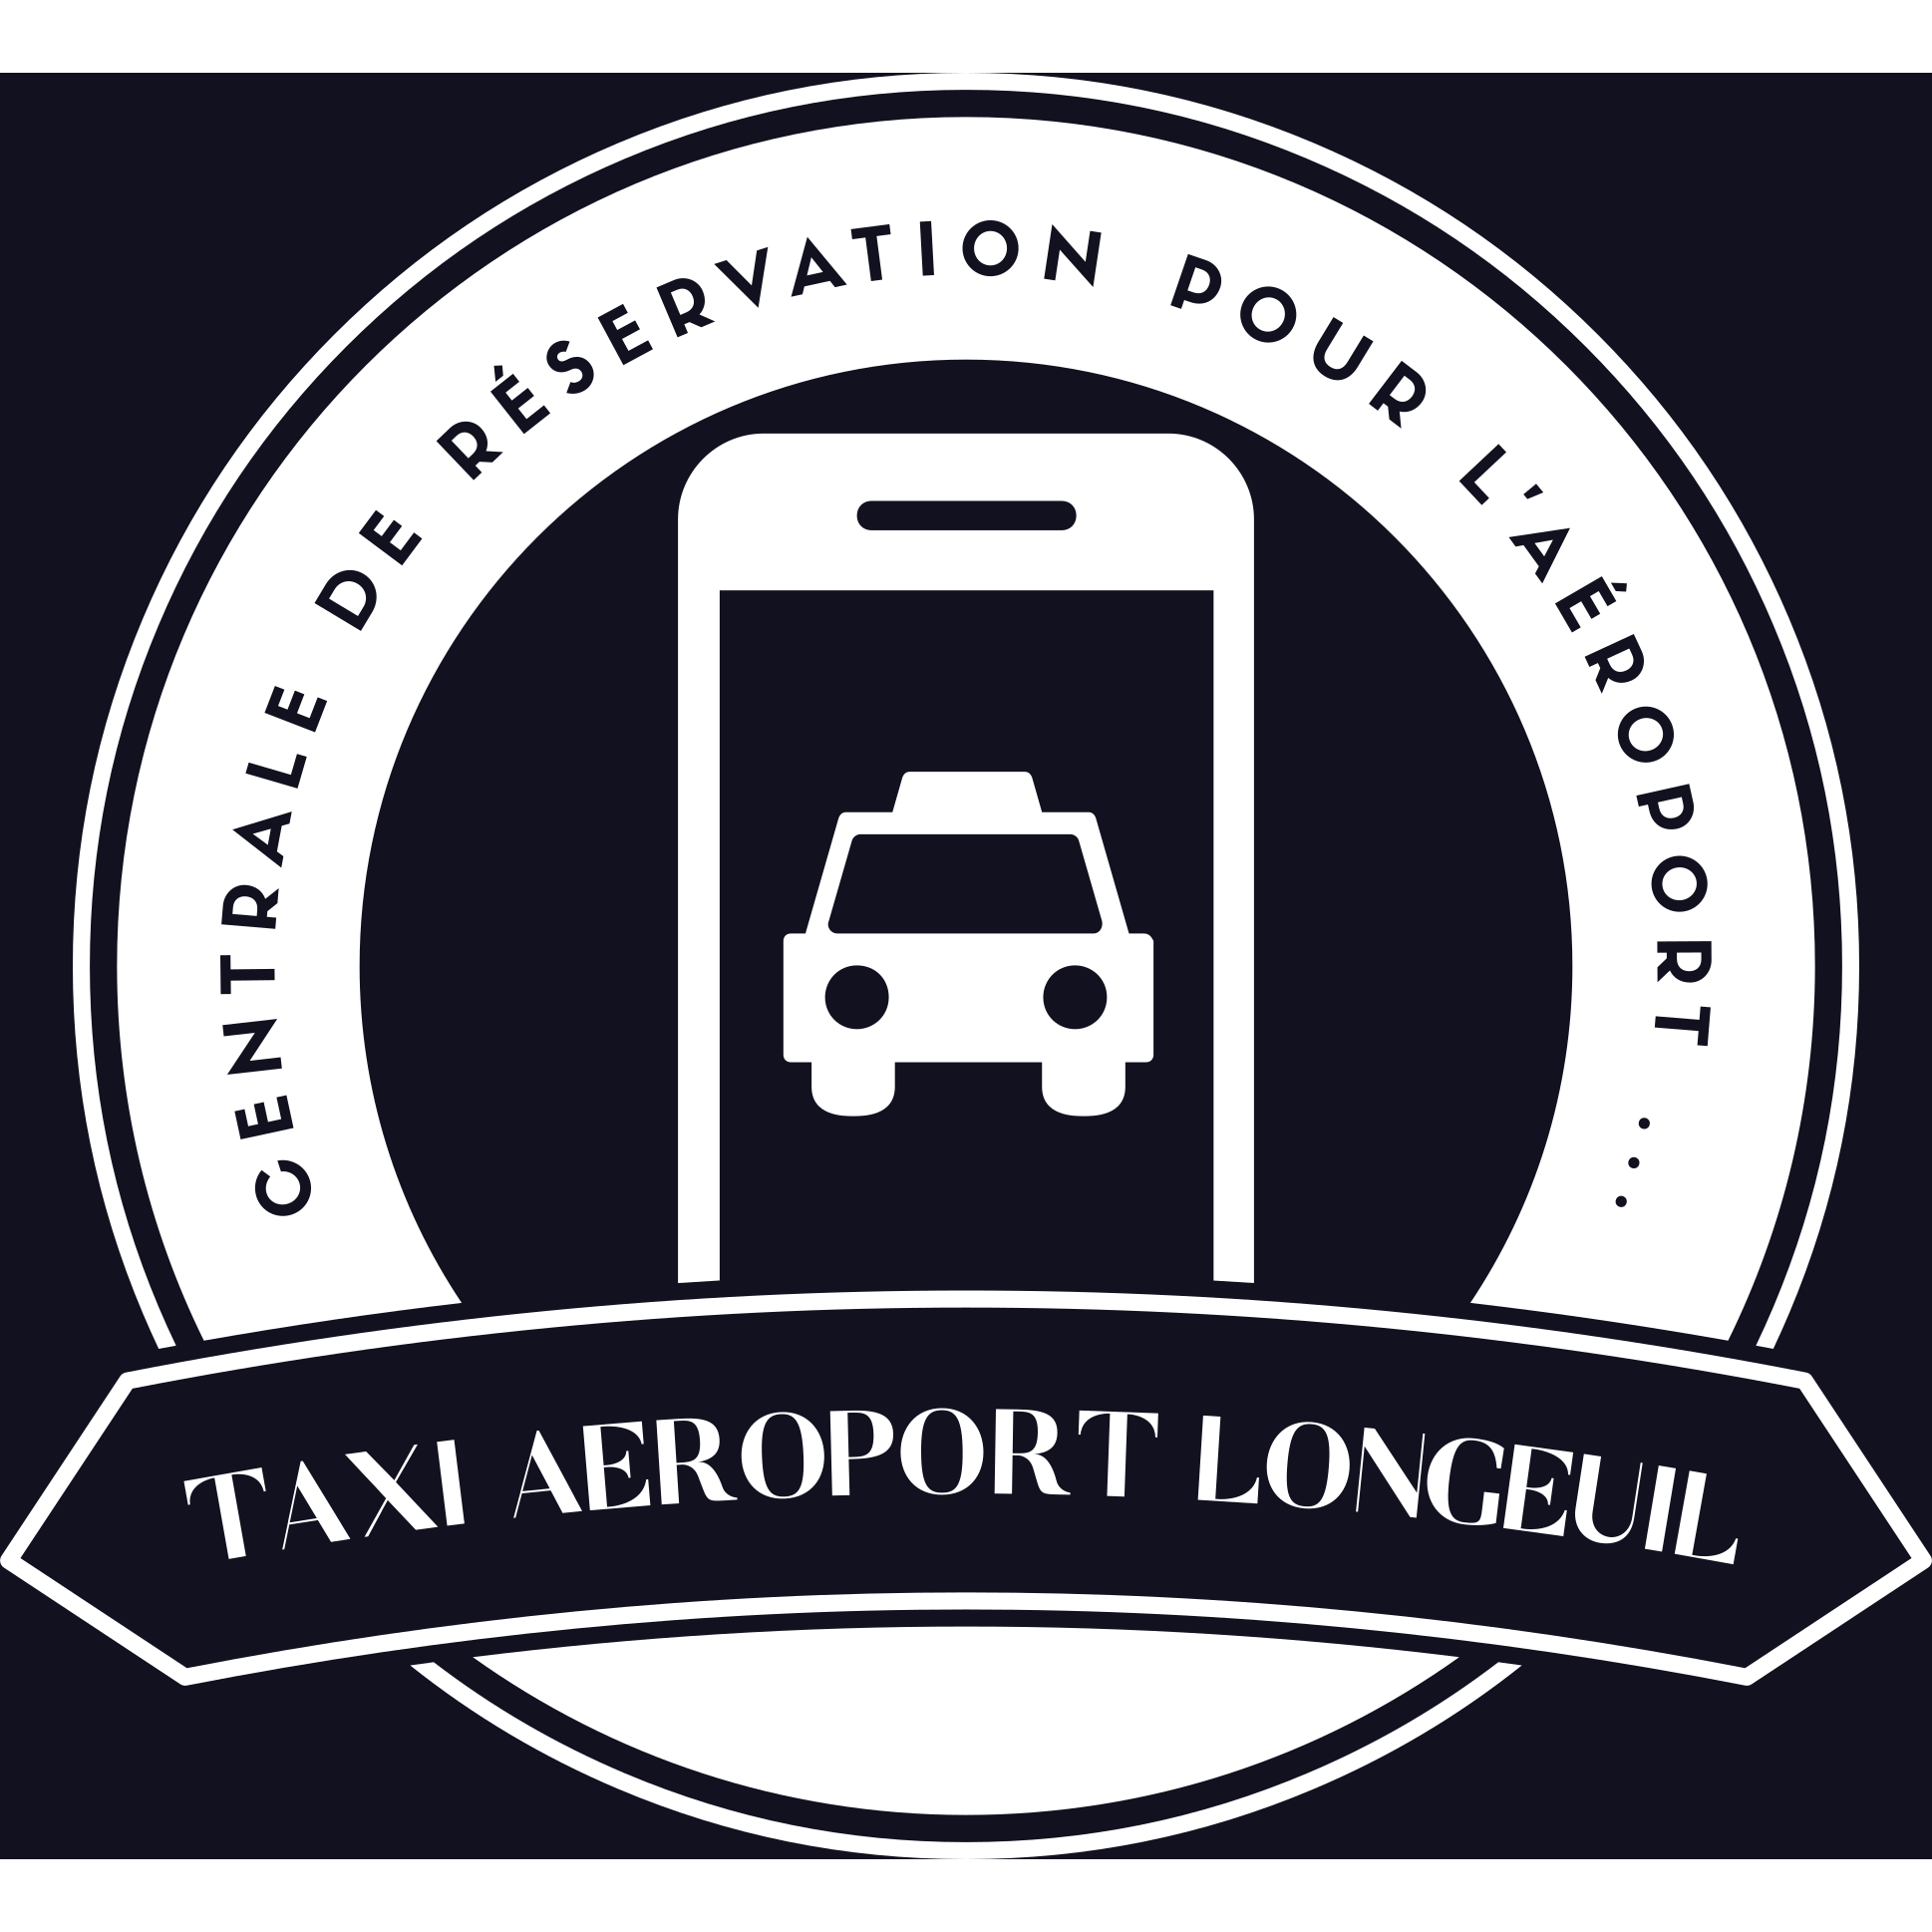 Taxi Aéroport Longueuil